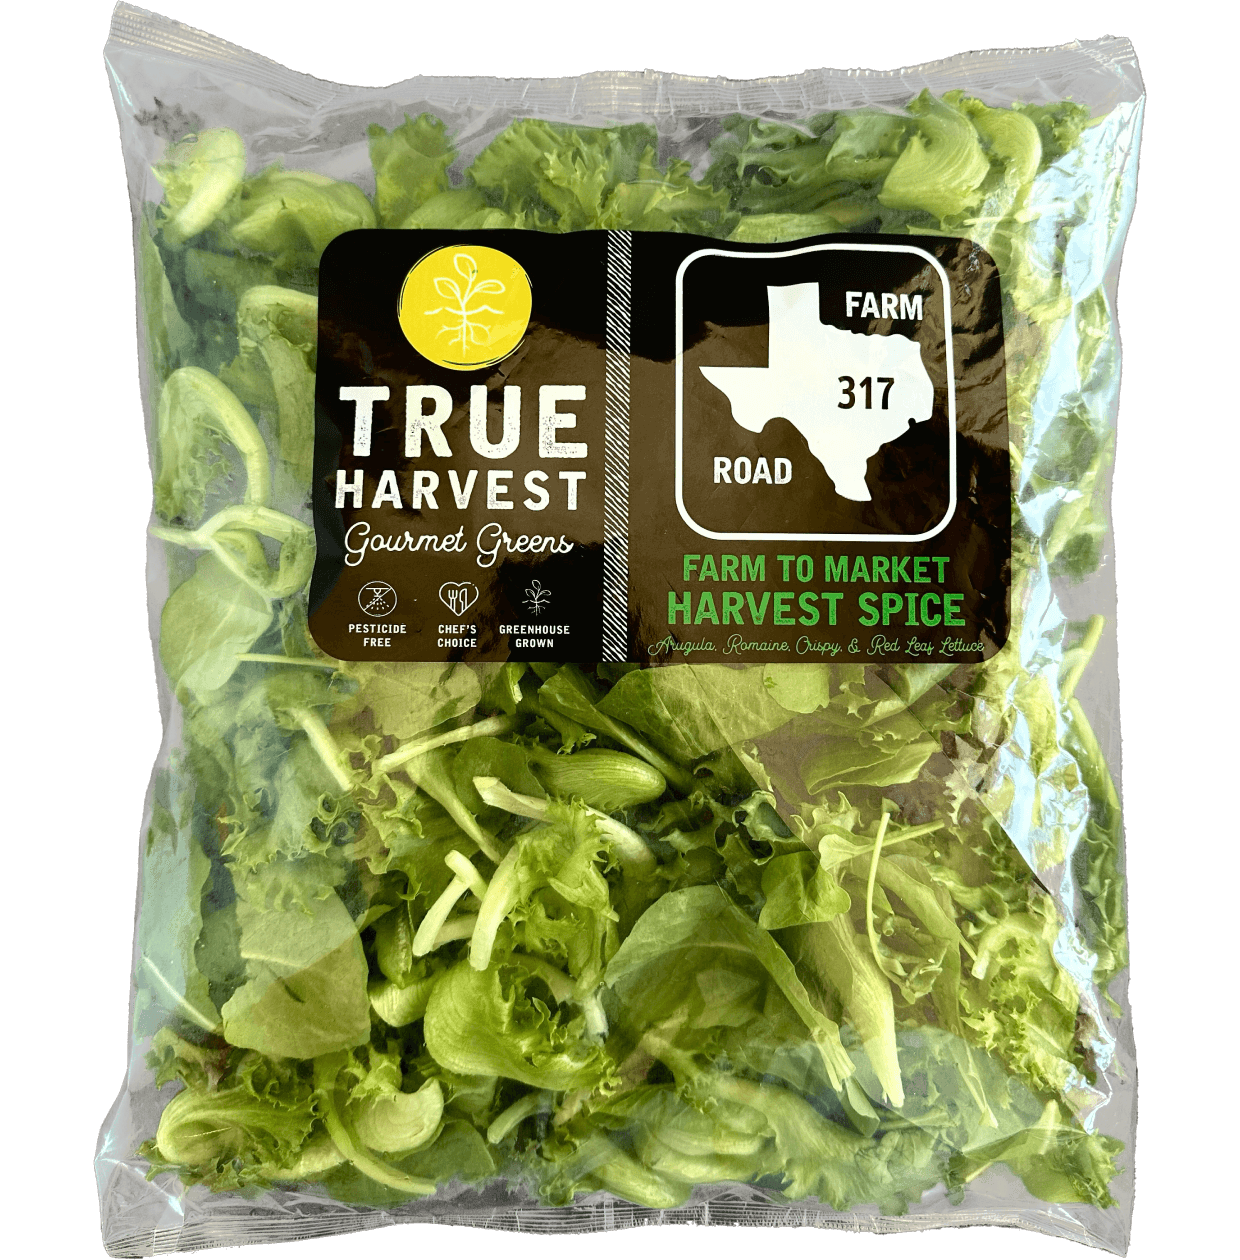 TrueHarvest Farms gourmet greens farm to market Harvest Spice bagged lettuce